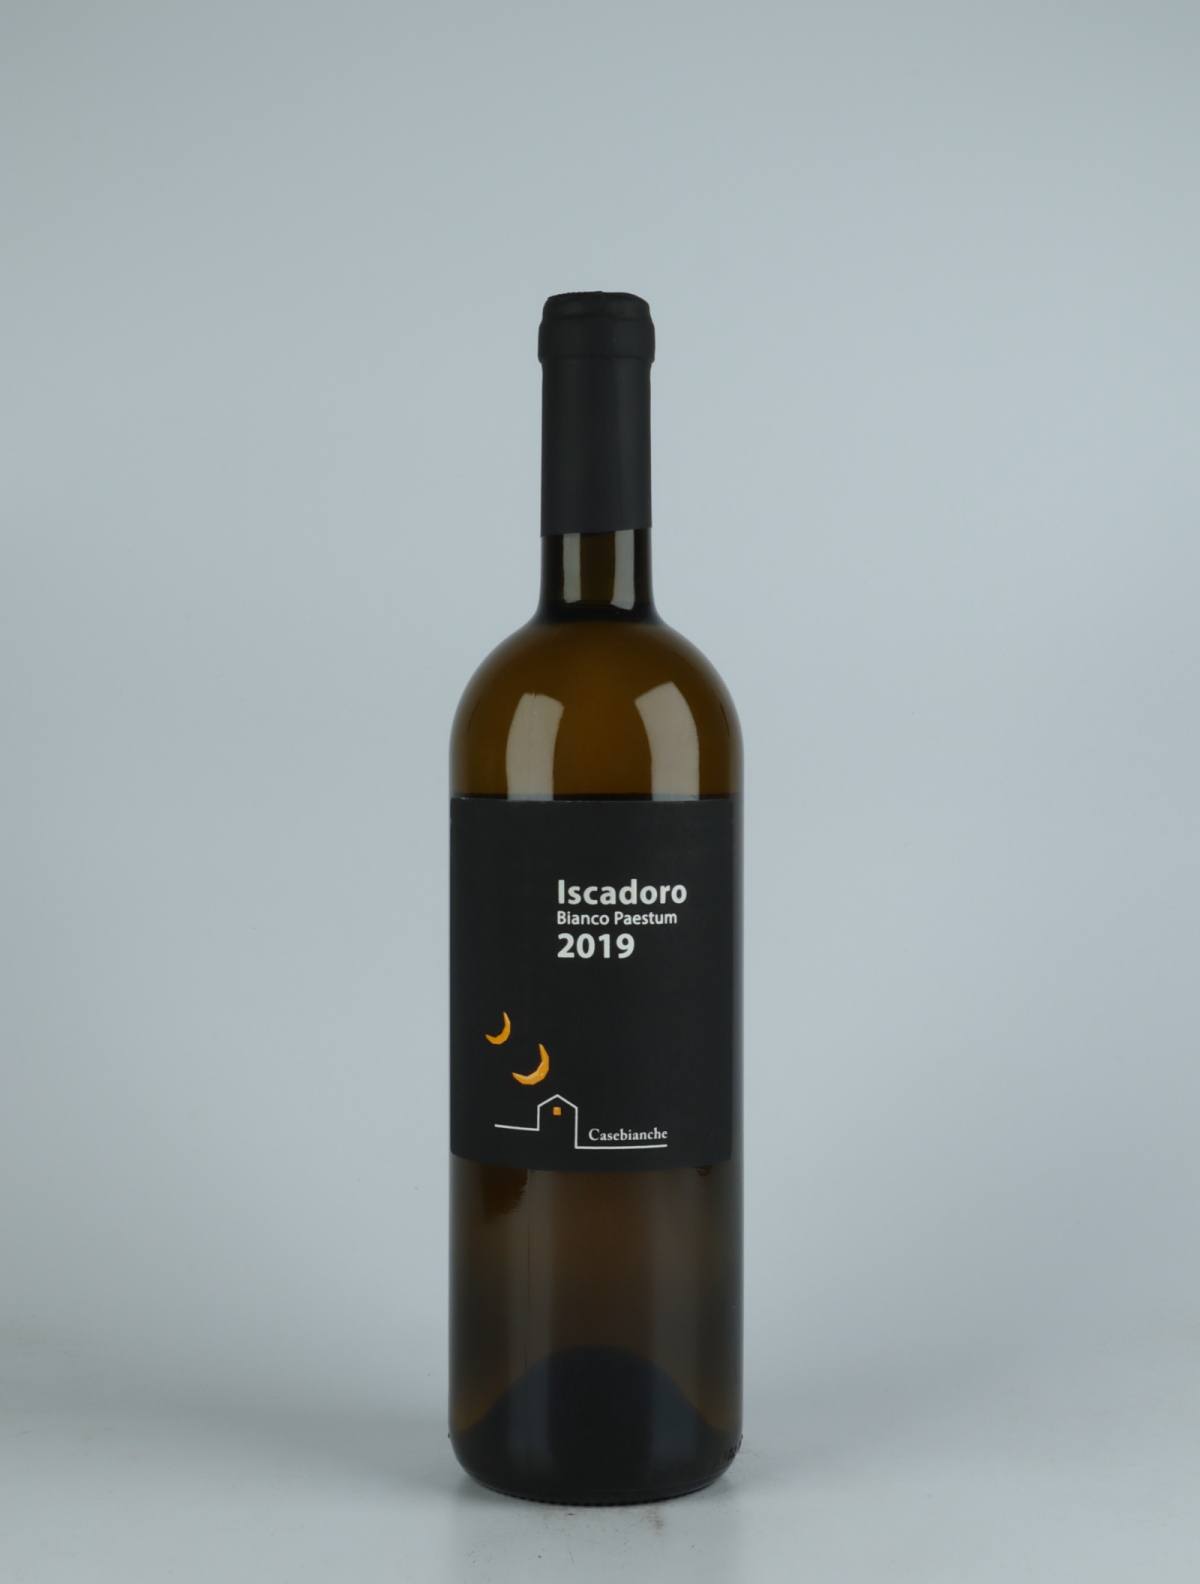 A bottle 2019 Iscadoro Orange wine from Casebianche, Campania in Italy